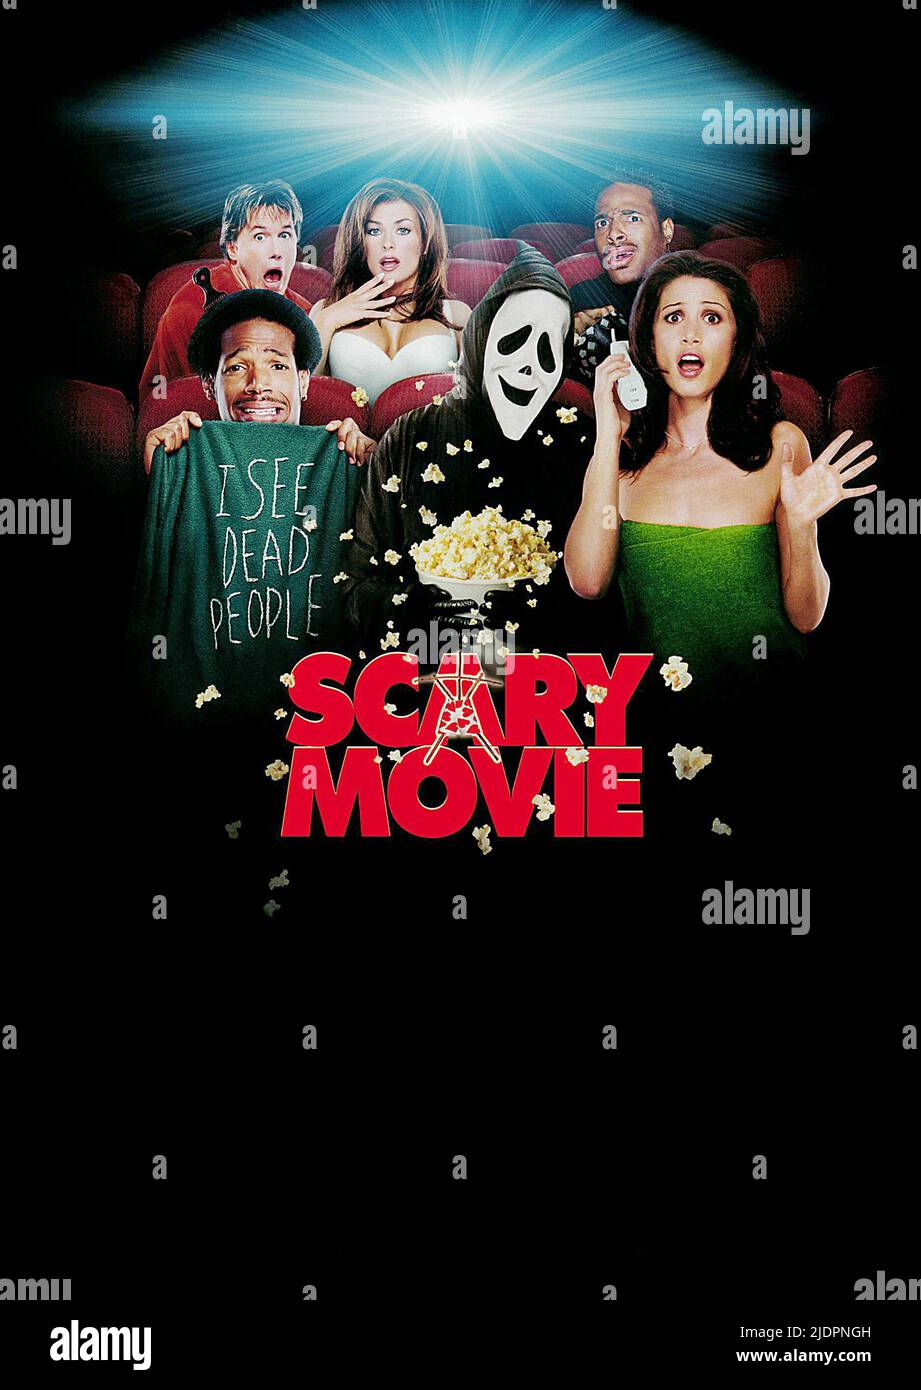 SCARY MOVIE FILM POSTER, SCARY MOVIE, 2000 Stock Photo